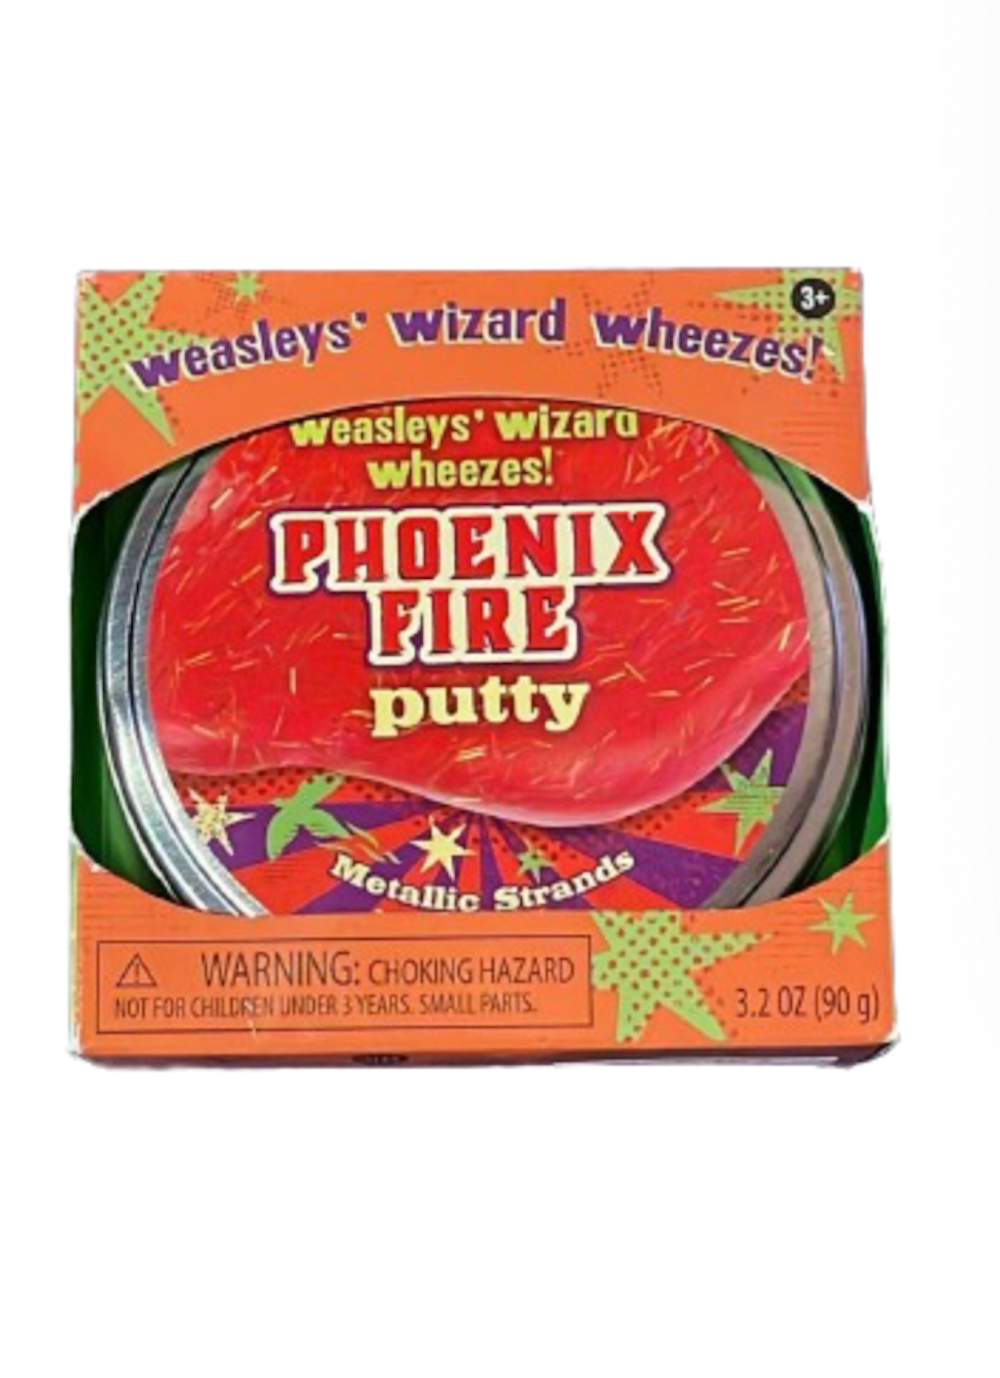 Universal Studios Harry Potter Weasleys' Wizard Wheezes Phoenix Fire Putty New